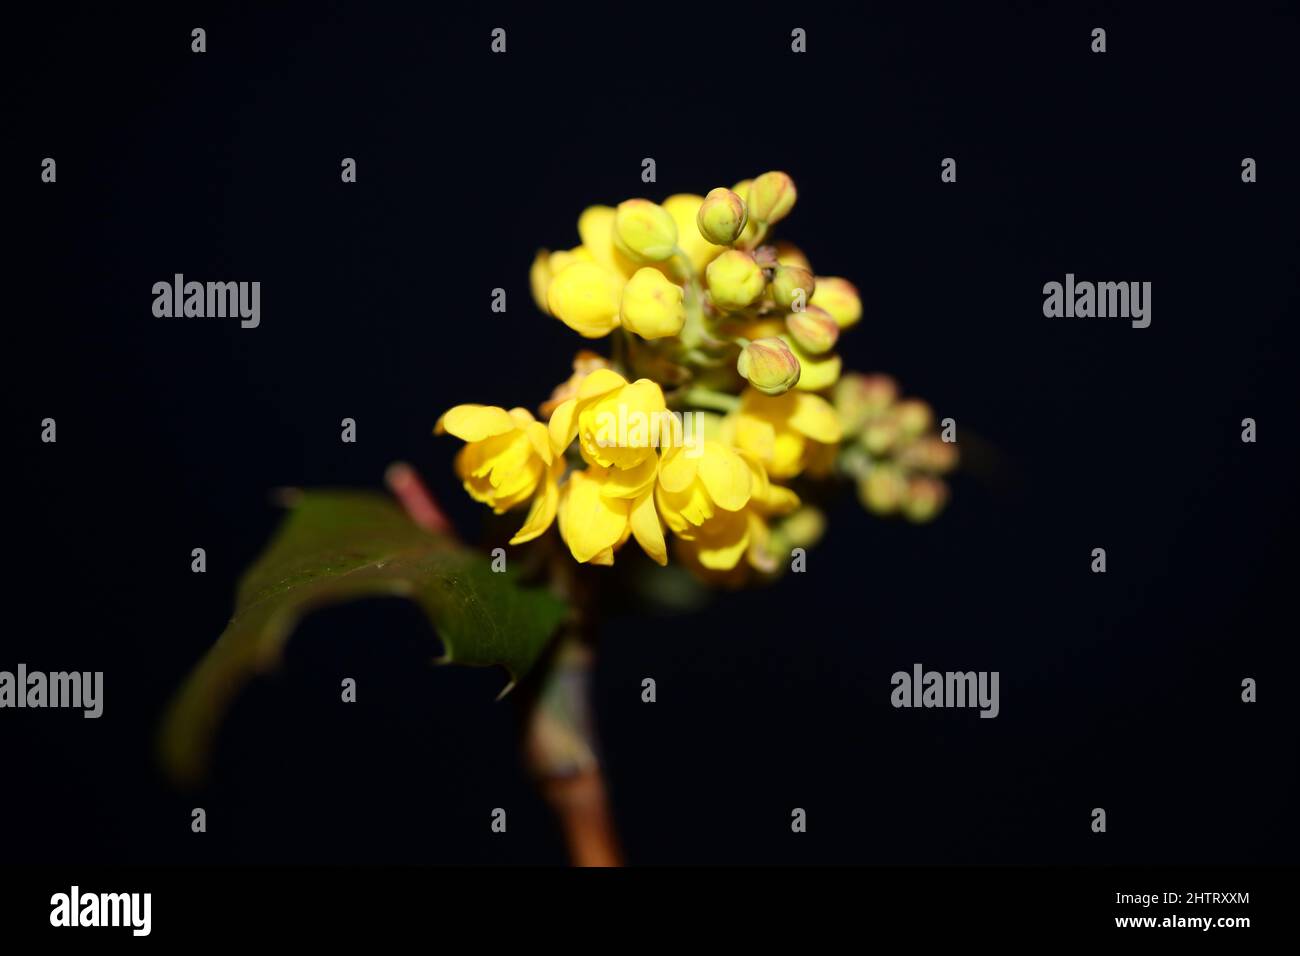 Flower blossoming Berberis aquifolium family berberidaceae macro background modern high quality big size prints Stock Photo